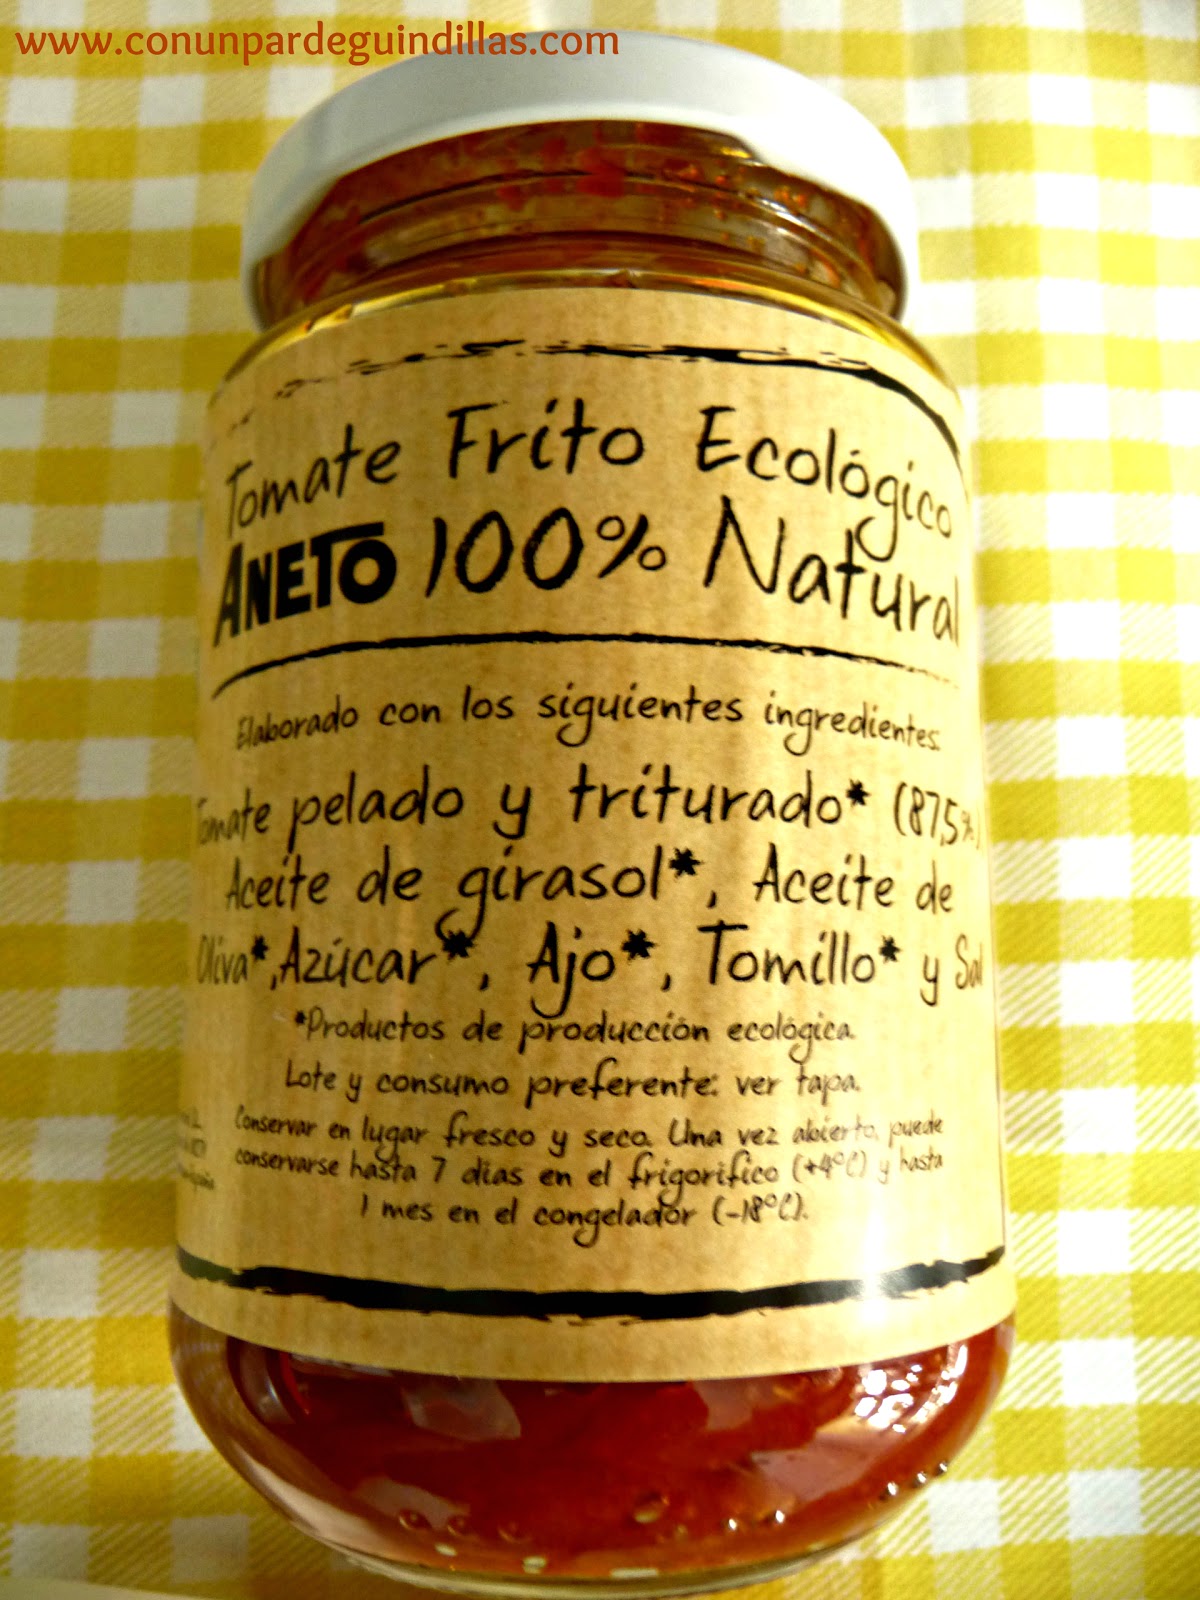 Tomate frito ecológico Aneto 100% Natural